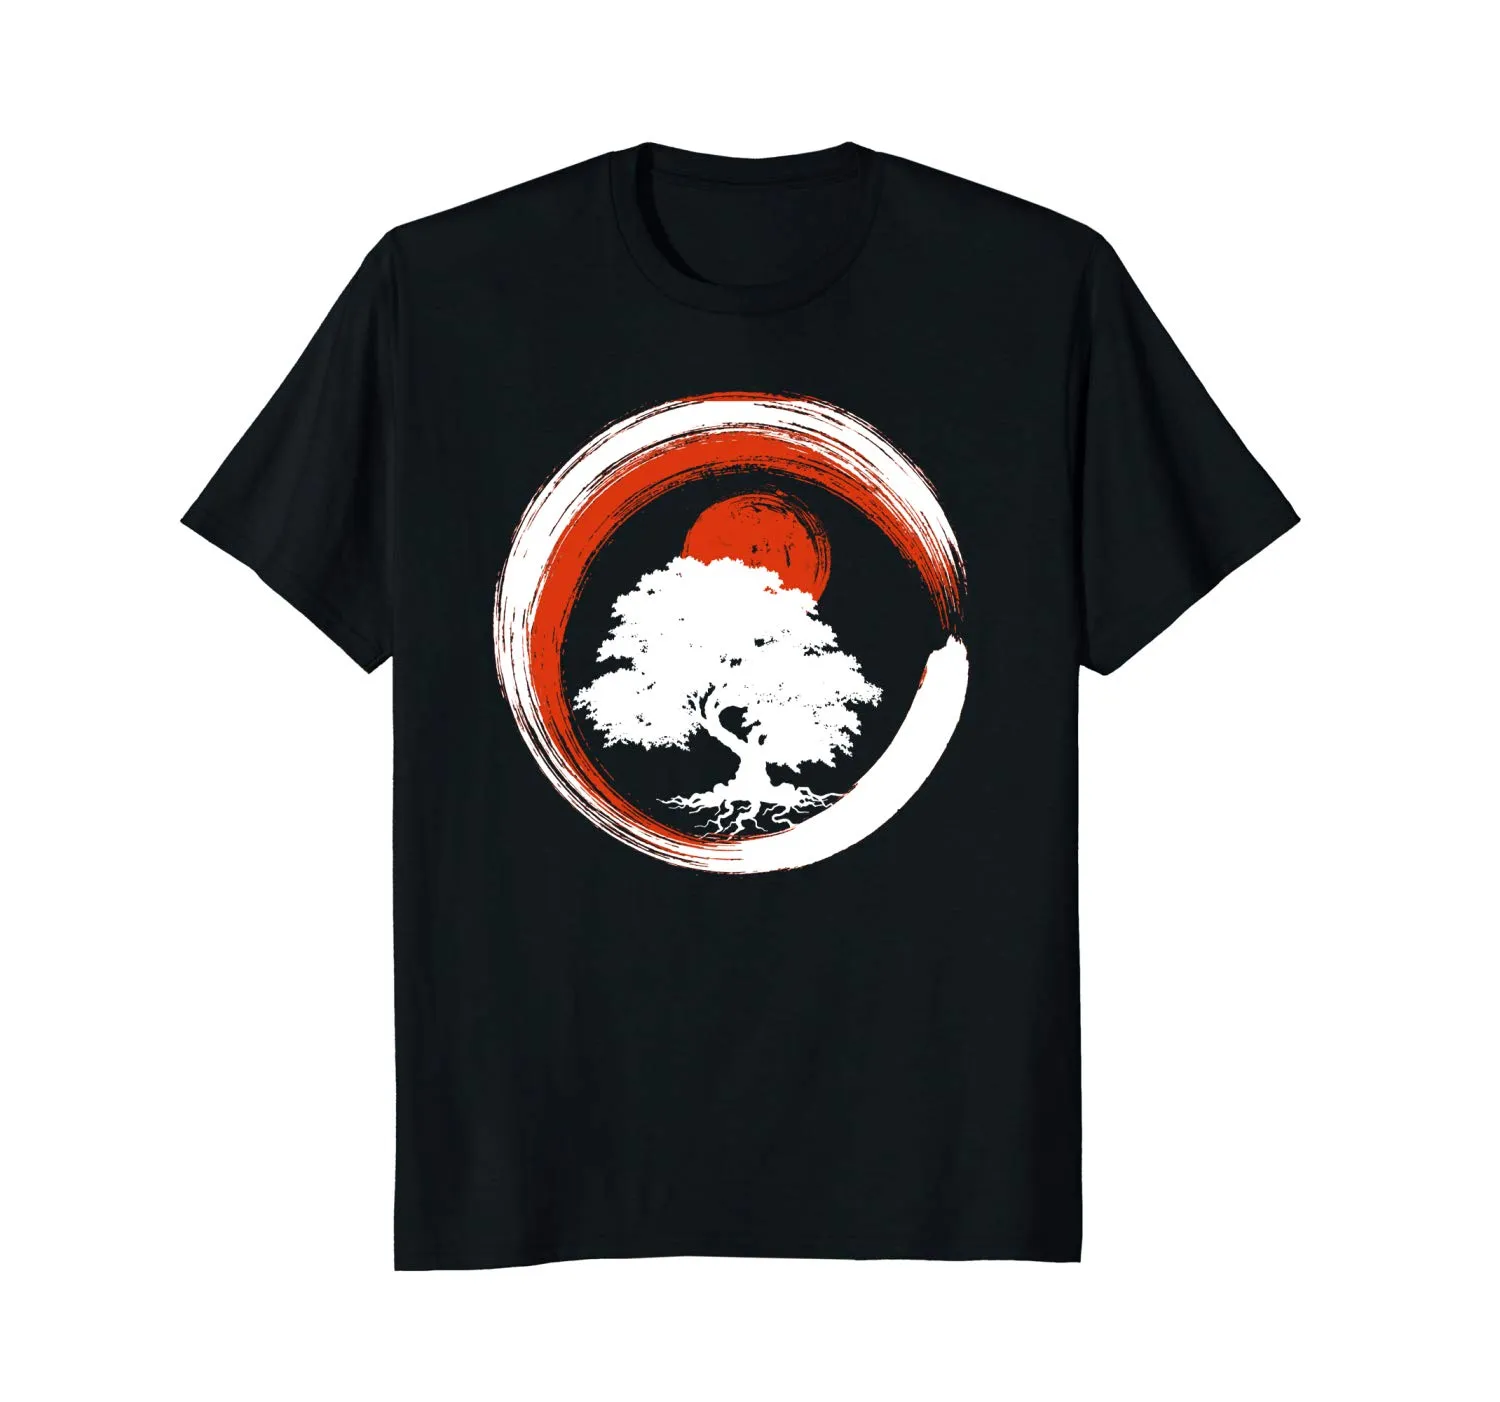 Bonsai Tree Enso Circle T-shirt Vintage Zen Calligraphy Art Summer Short Sleeves Fashion T Shirt Free Shipping